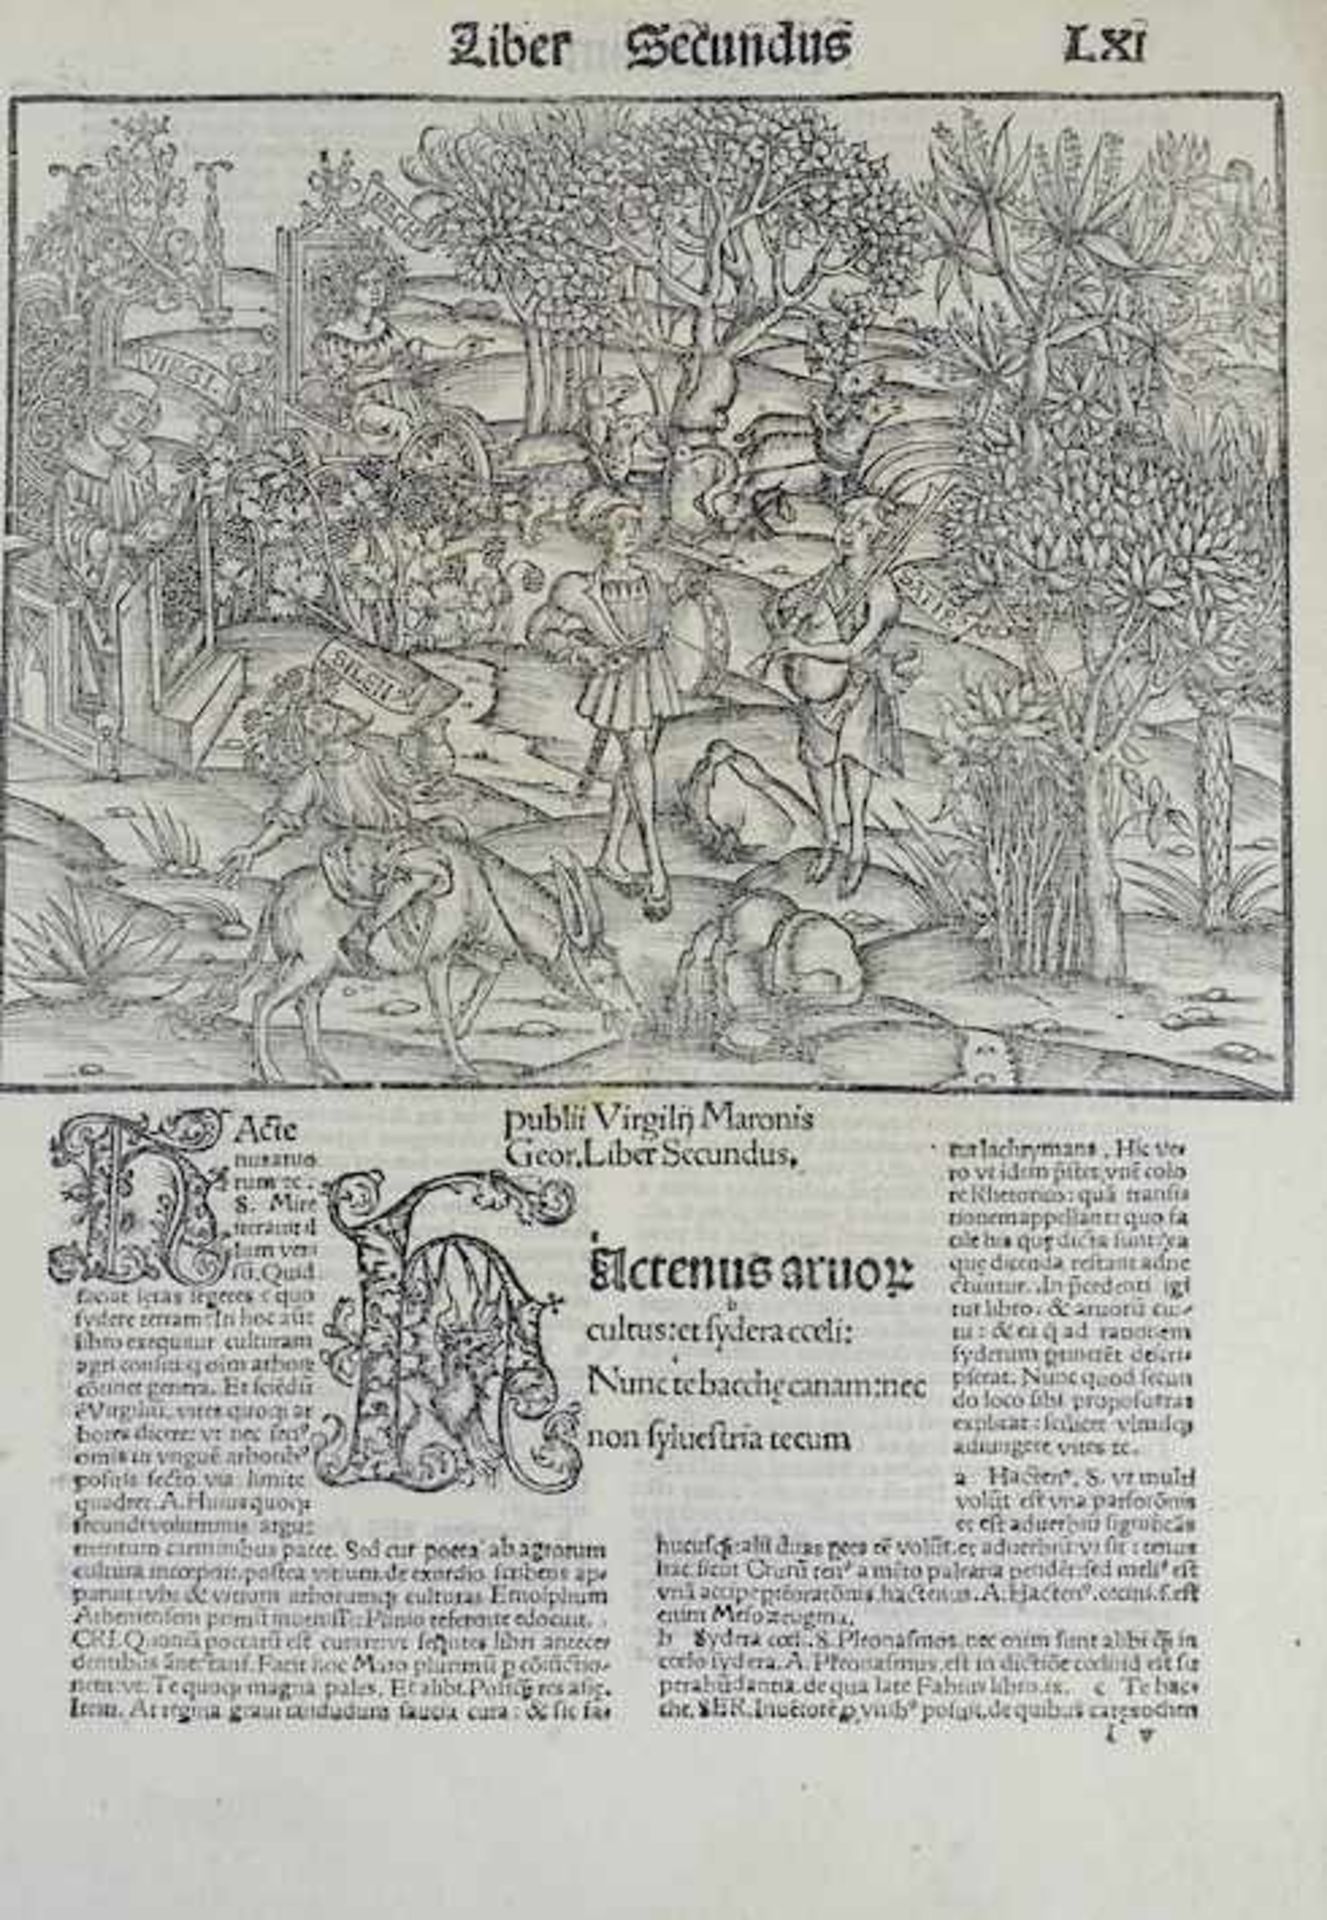 BOOK ILLUSTRATION -- LEAF from Vergilius, 'Opera' book 2: Georgica, folio 61. (Strasbourg, Seb.